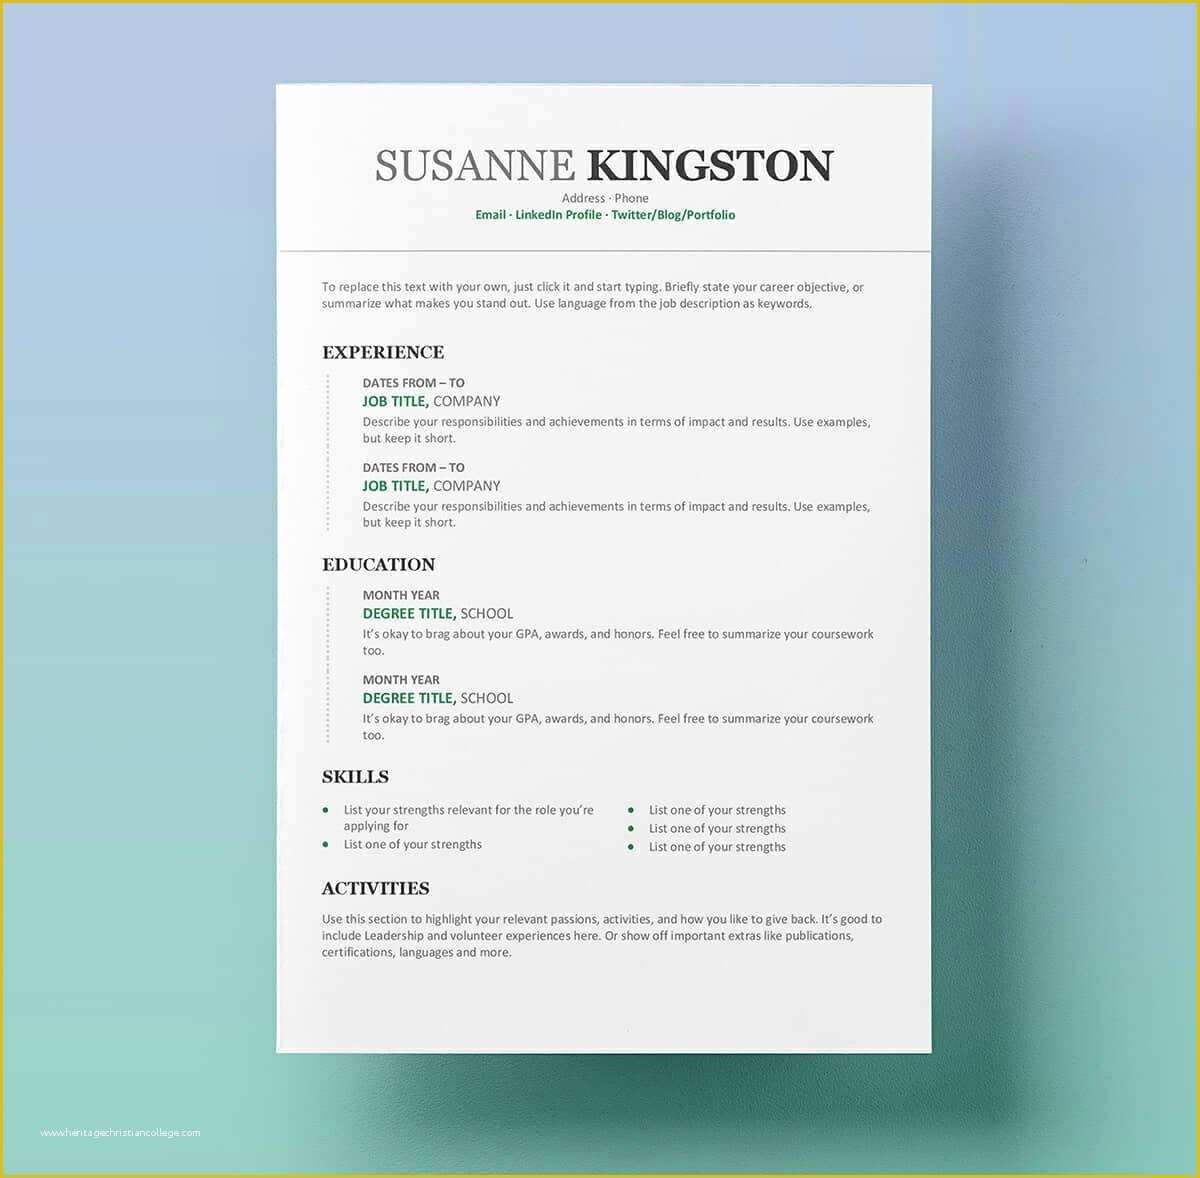 Free Printable Resume Templates Microsoft Word Of Resume Templates for Word Free 15 Examples for Download